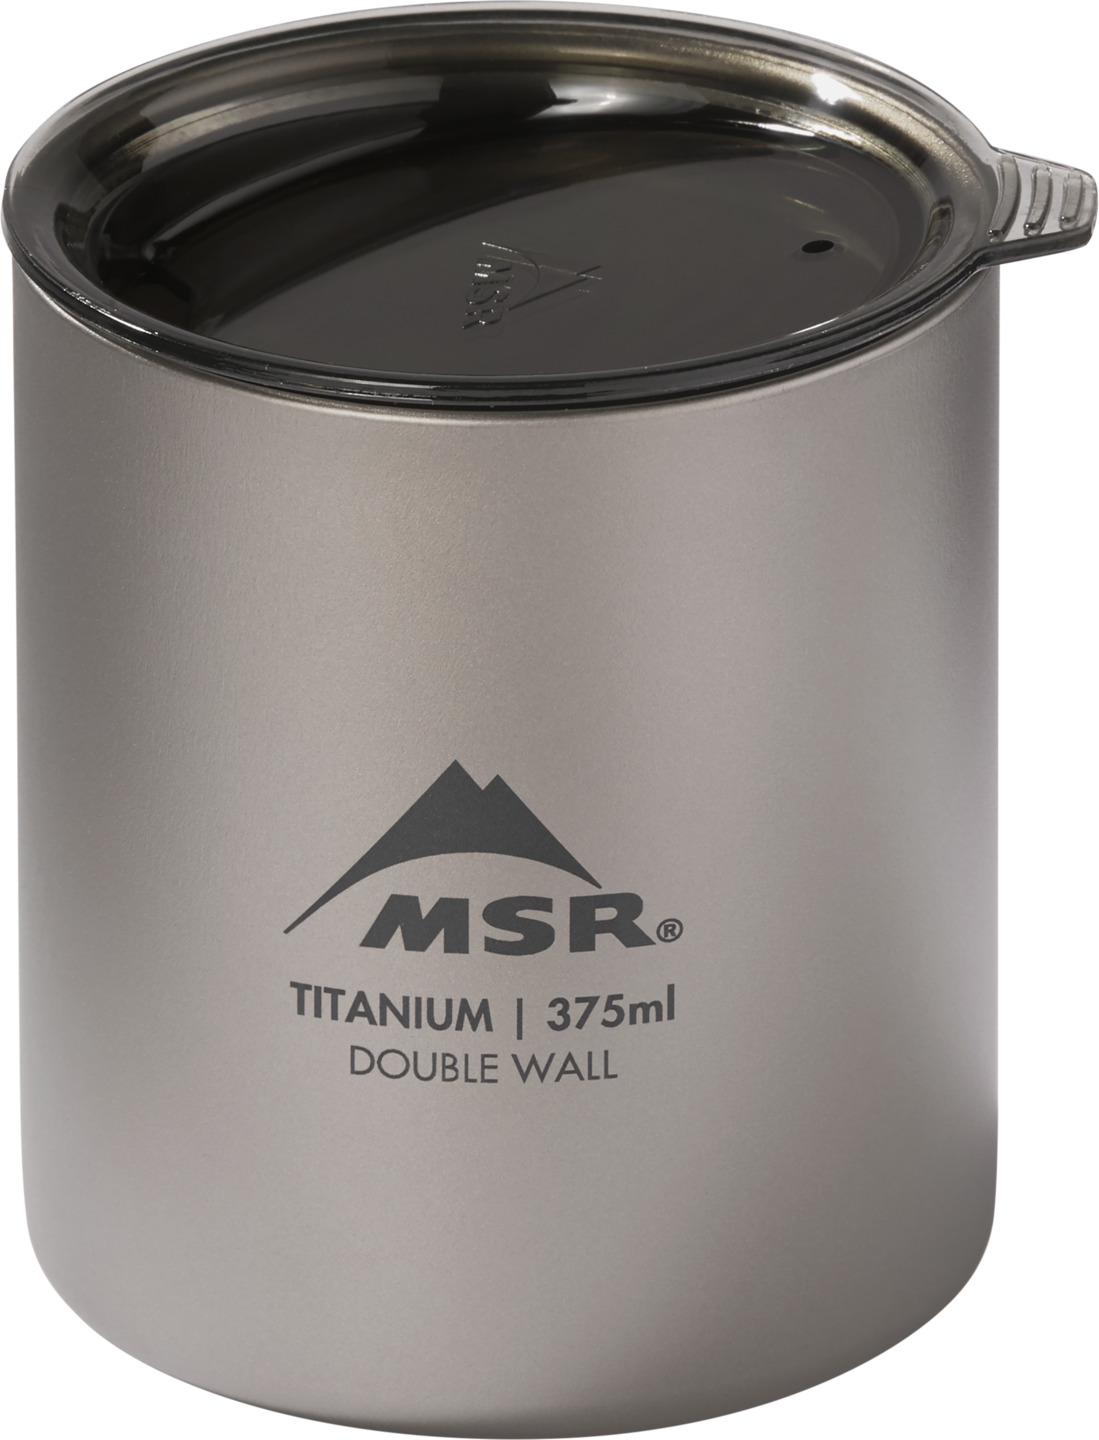 MSR TITAN CUP DOUBLE WALL termohrnek 375ml